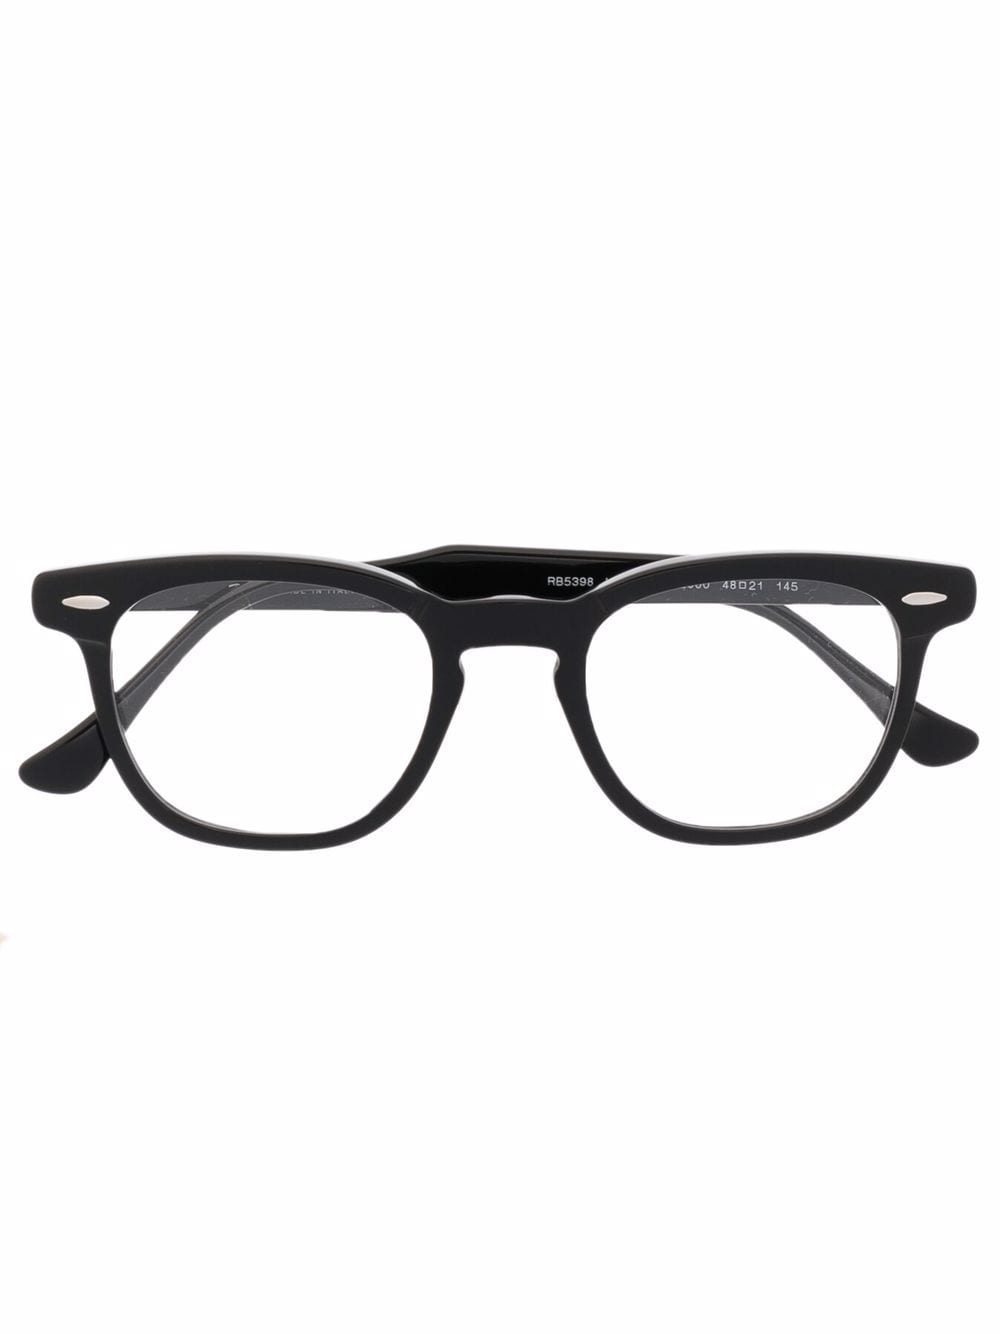 Ray-Ban square-frame glasses - Black von Ray-Ban